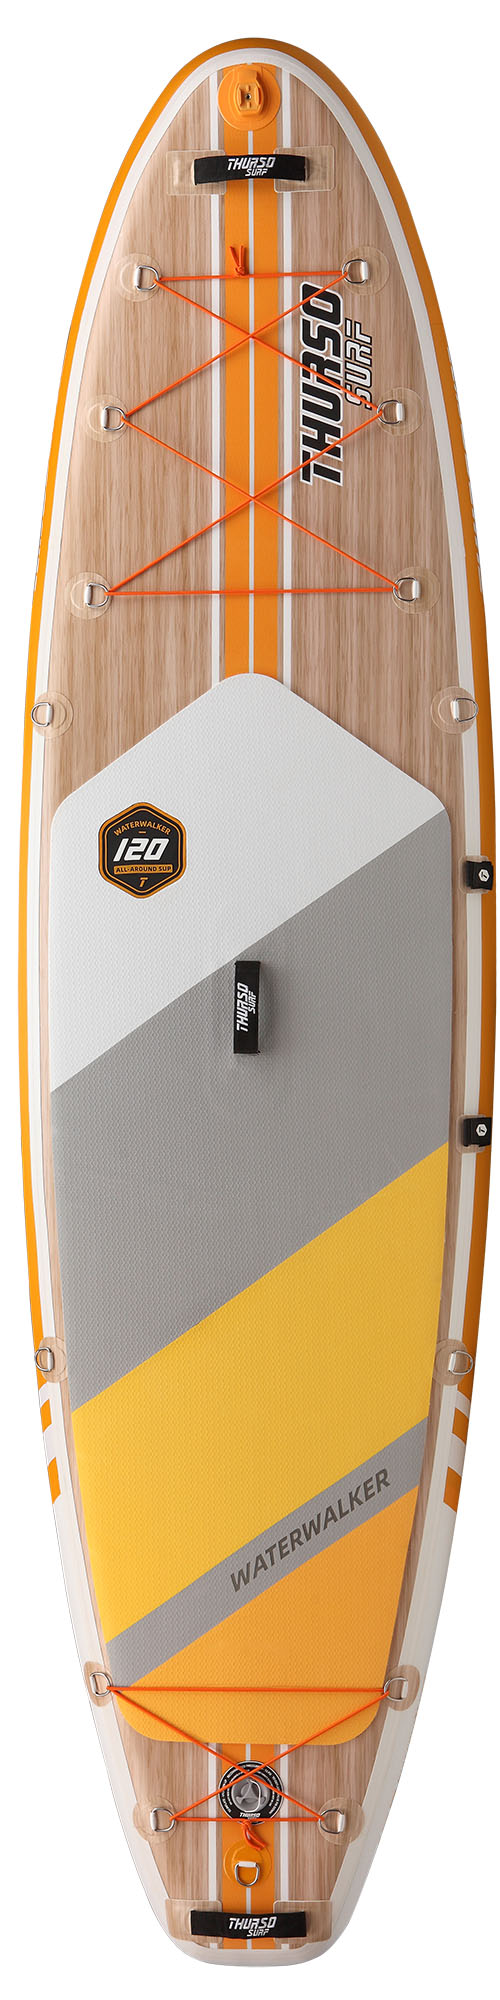 stand-up-paddle-board-waterwalker-120-tangerine-thurso-surf-vertical-2000.jpg